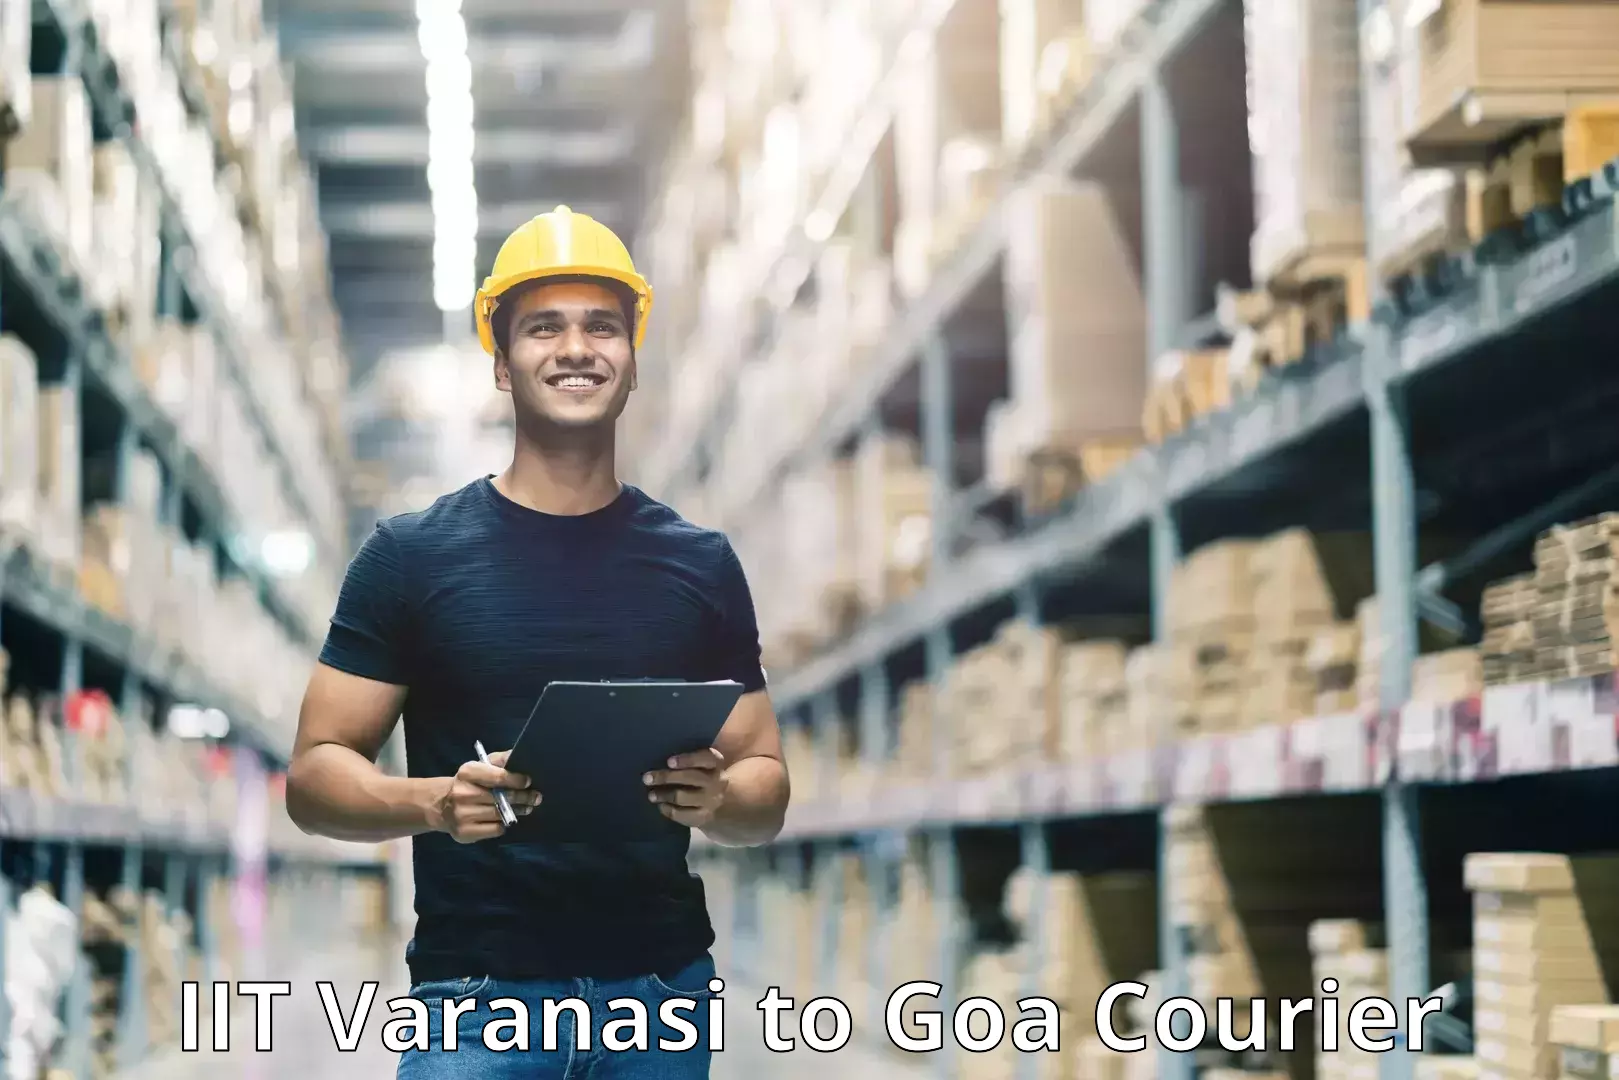 User-friendly courier app IIT Varanasi to Ponda